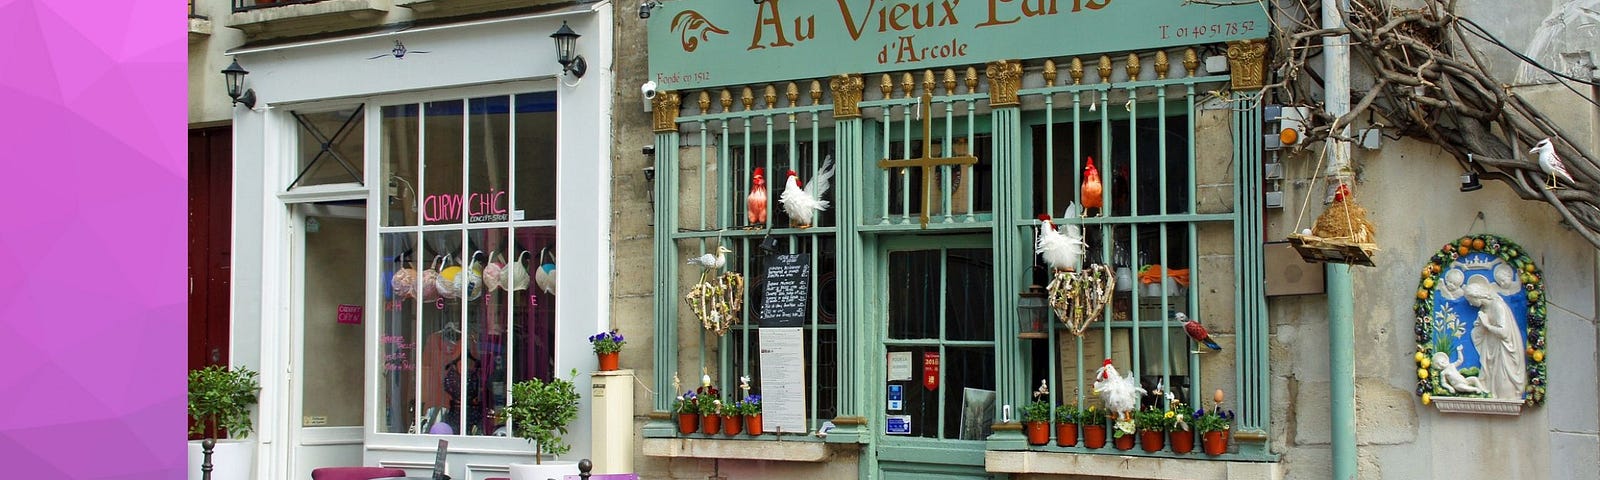 The colorful seagreen and magenta streetscape outside Au Vieux Paris d’Arcole restaurant in central Paris.